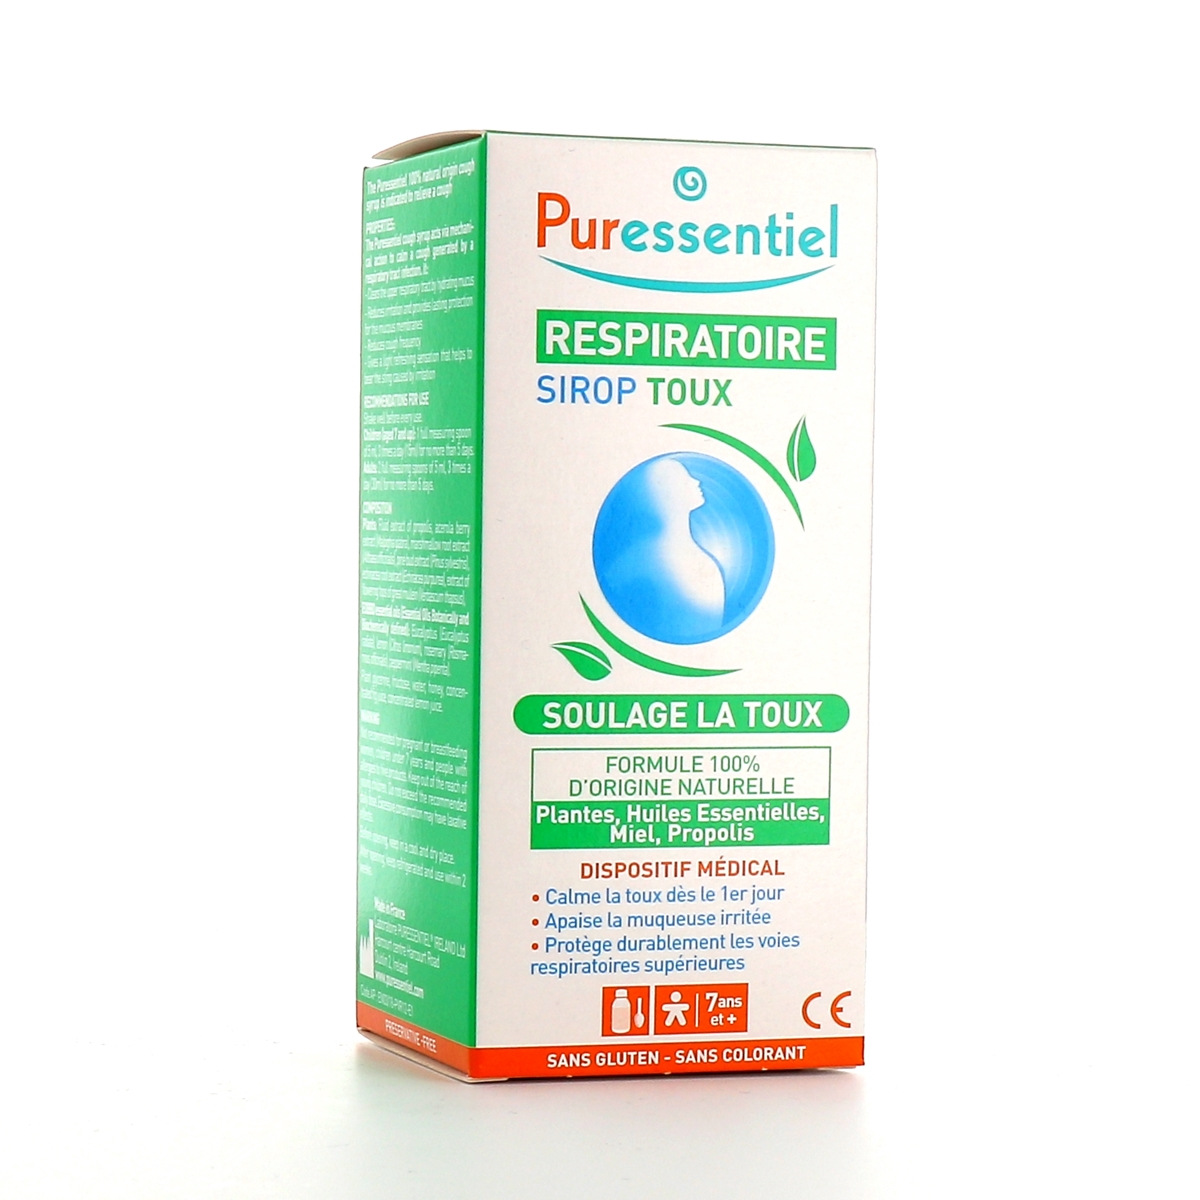 PURESSENTIEL RESPIRATOIRE SIROP TOUX ENFANT 125 ML - Sphère ORL - Pharmacie  de Steinfort